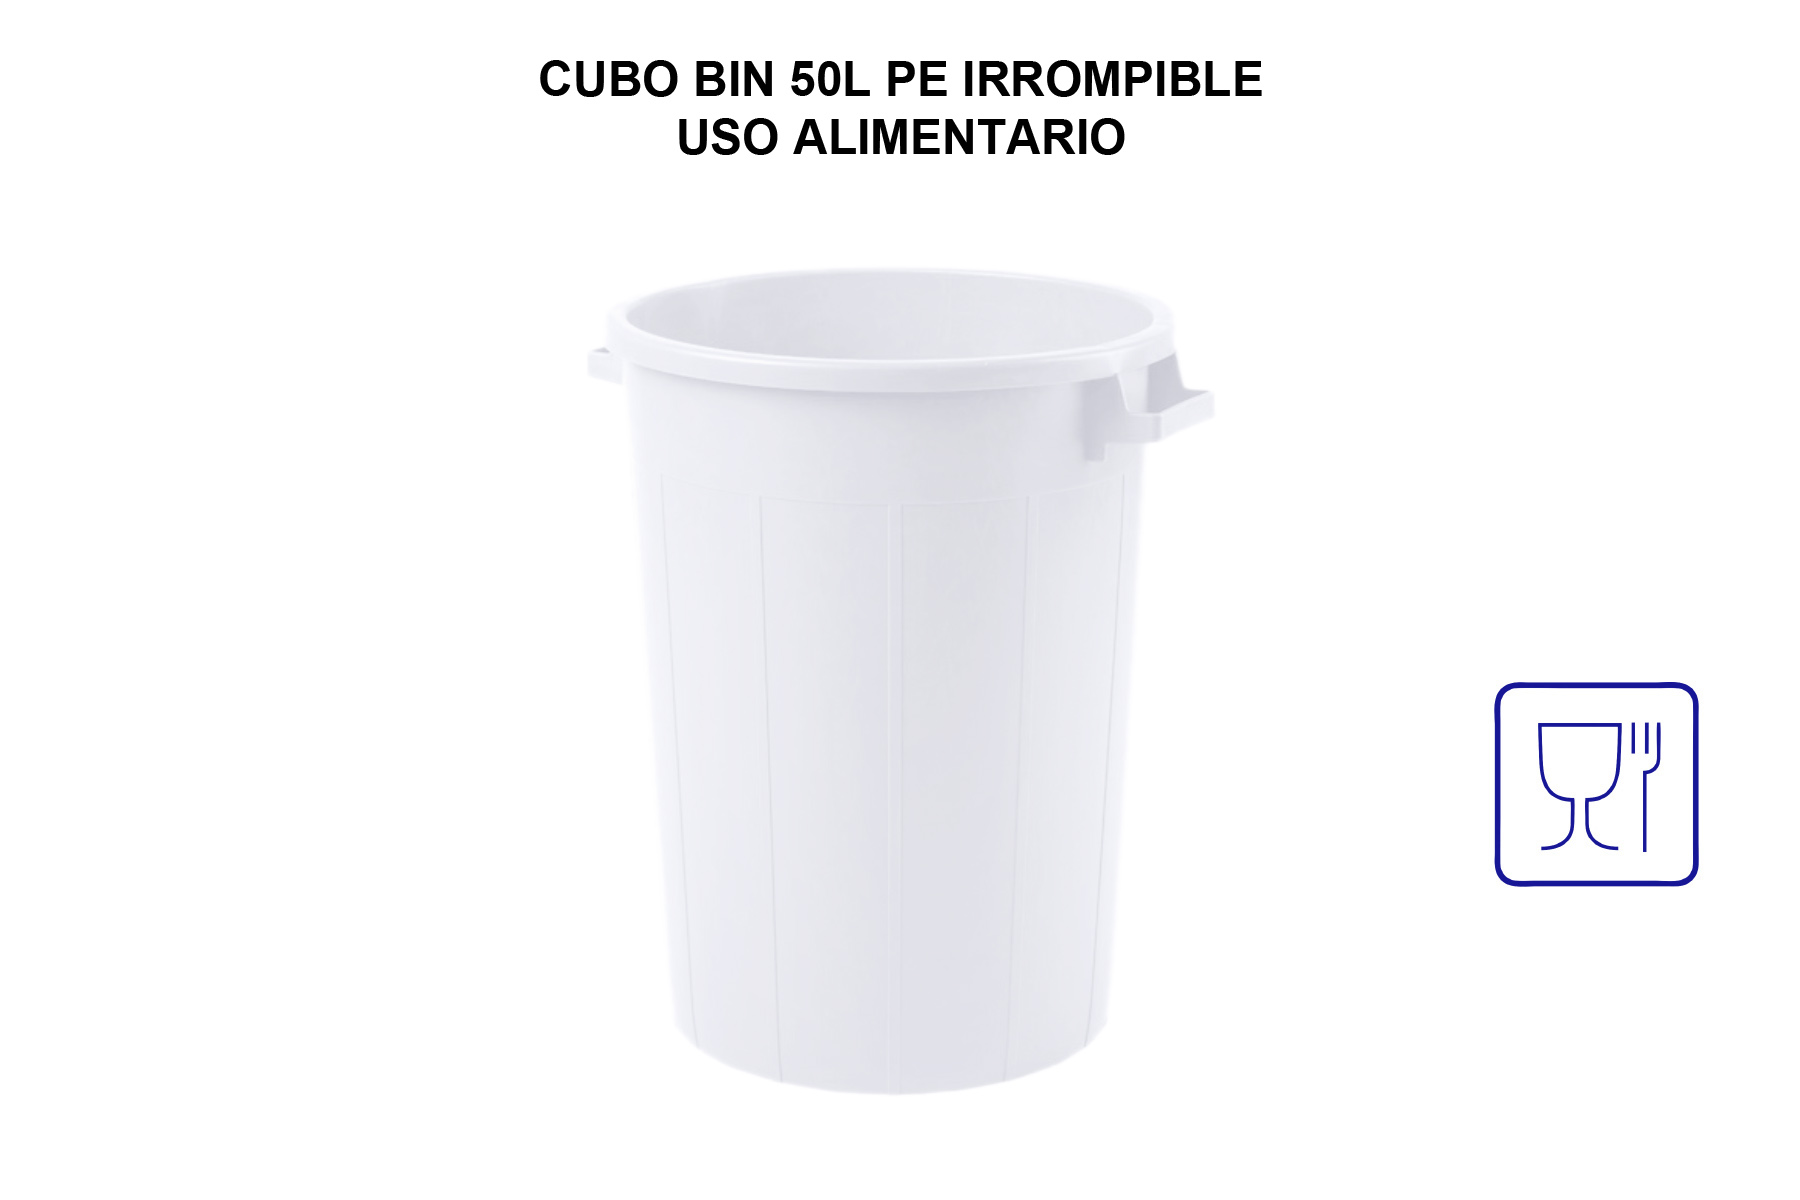 CUBO BIN 50L PE IRROMPIBLE USO ALIMENTARIO